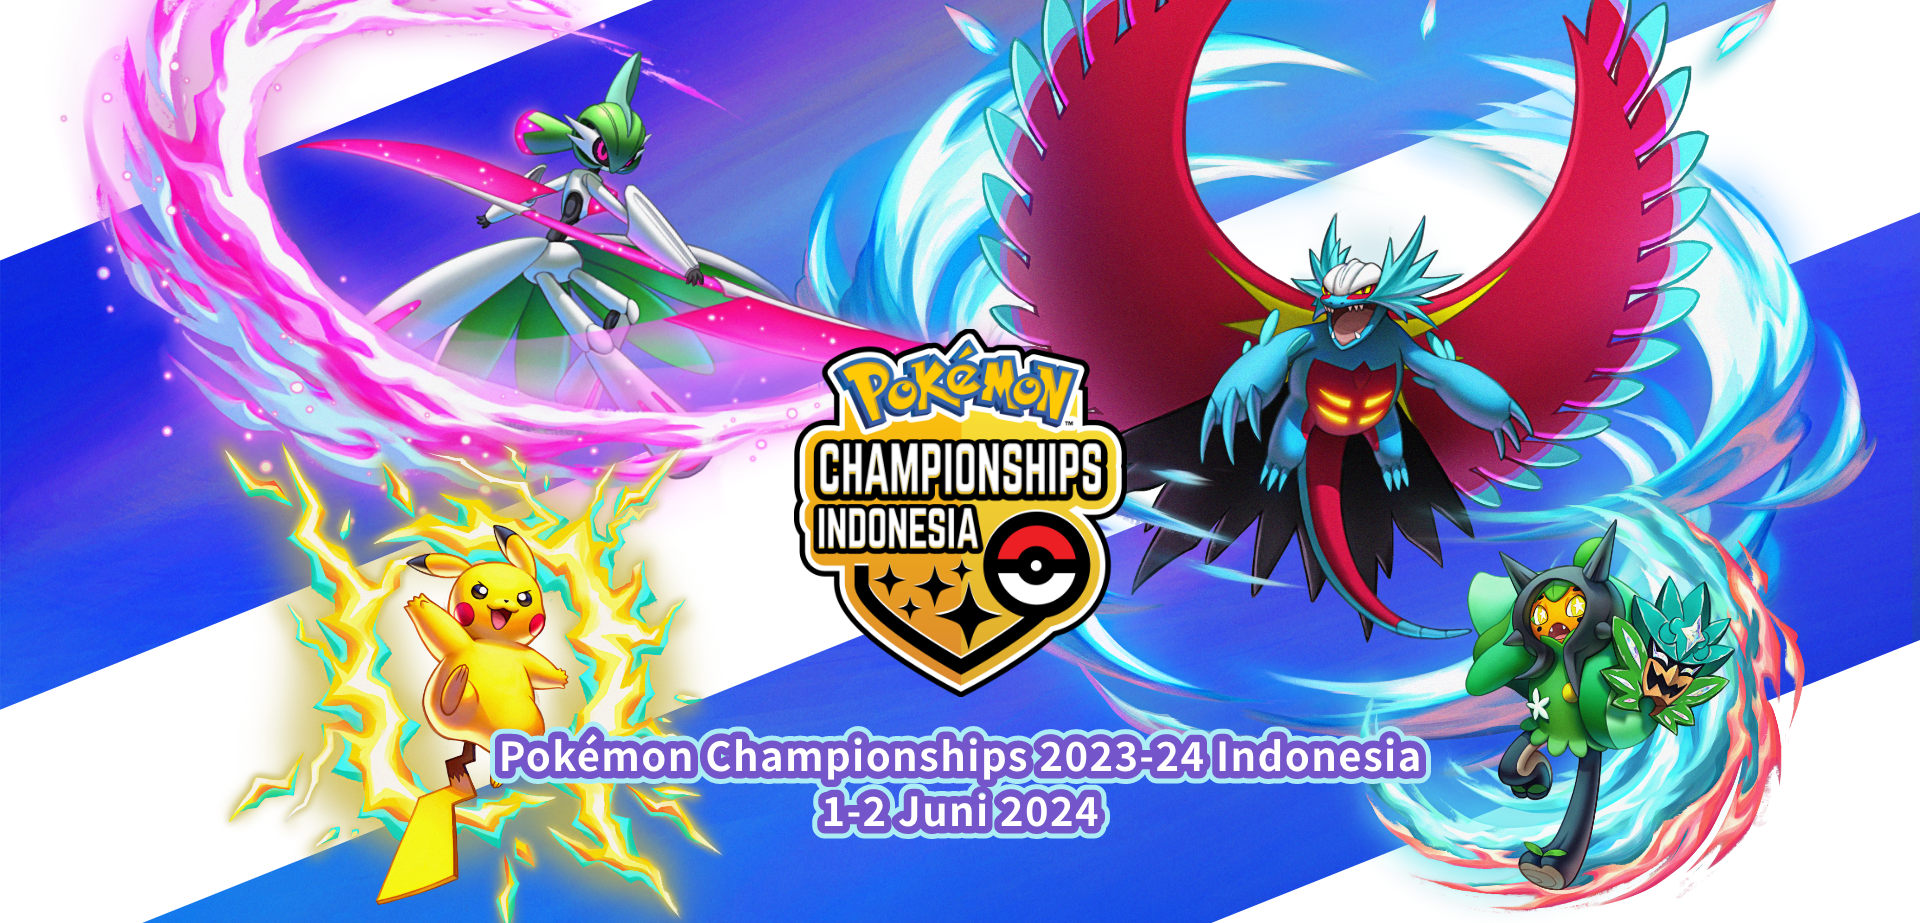 Pokemon_Kampanye / Event_Pokémon Championships 2023-24 Indonesia